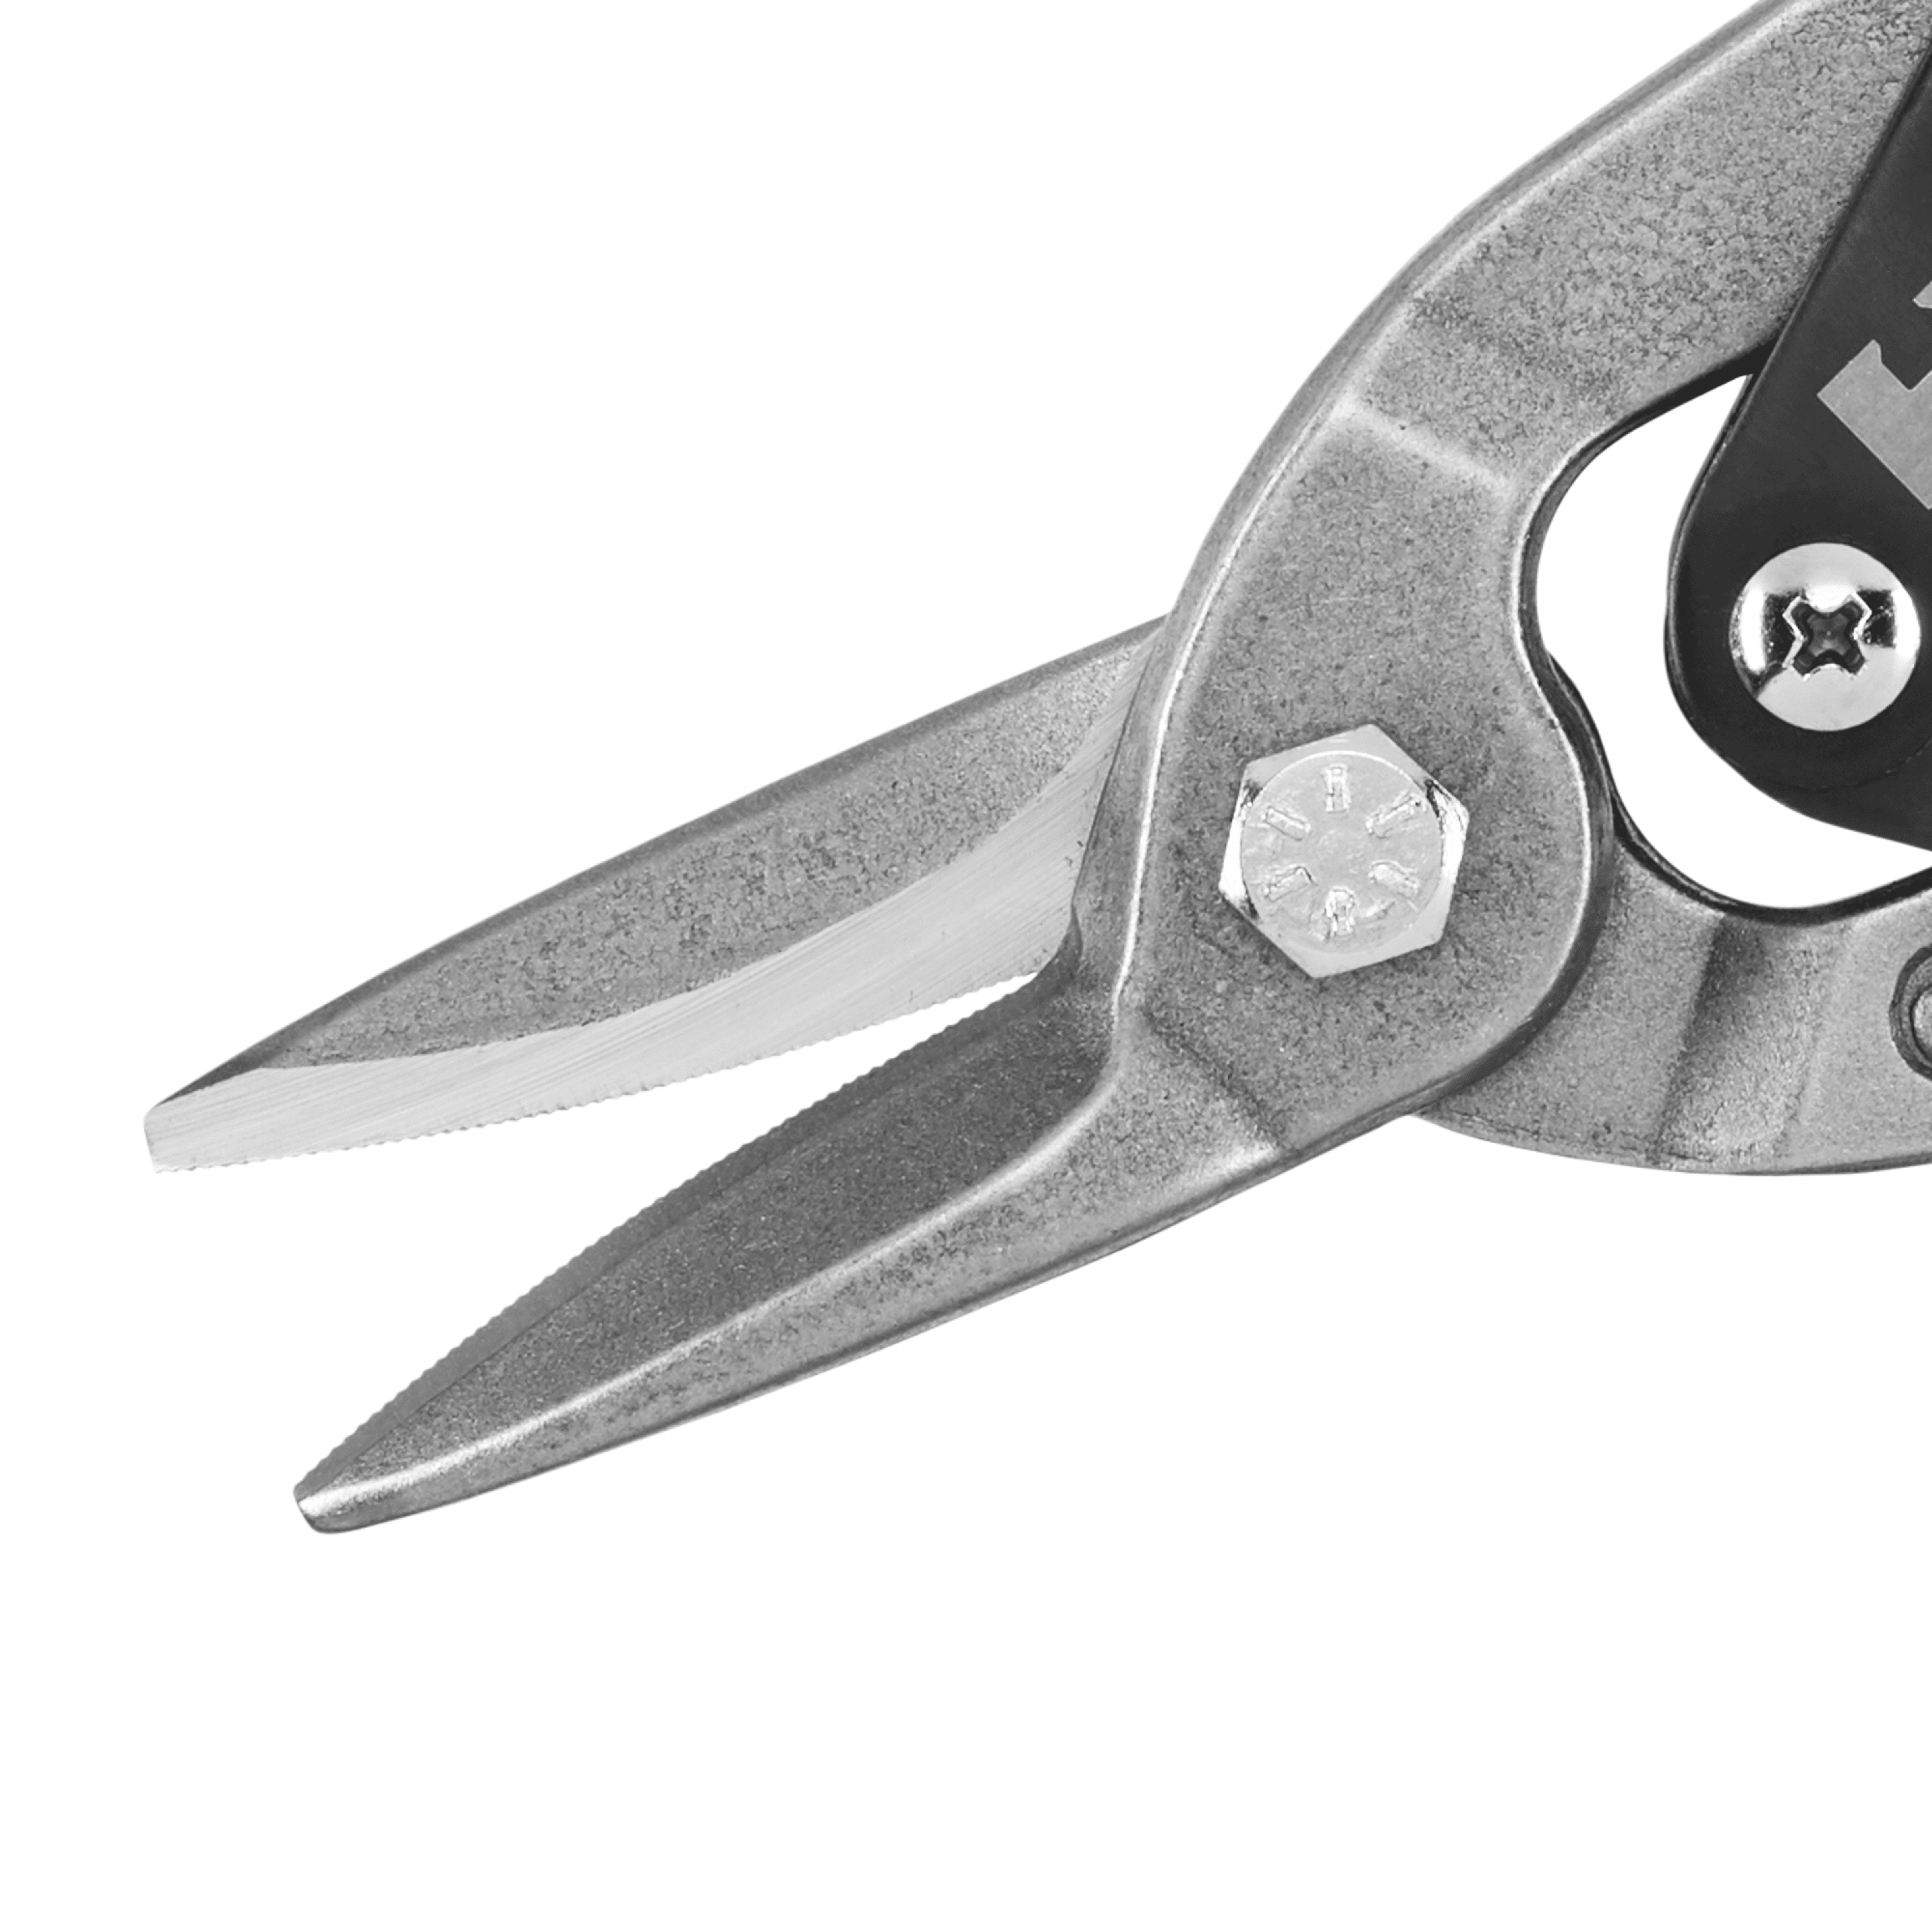 Flameweld Aviation Snips Straight Cut - 10 Inch Tin Snips Cutter for Cutting  Metal Sheet, Chrome Vanadium